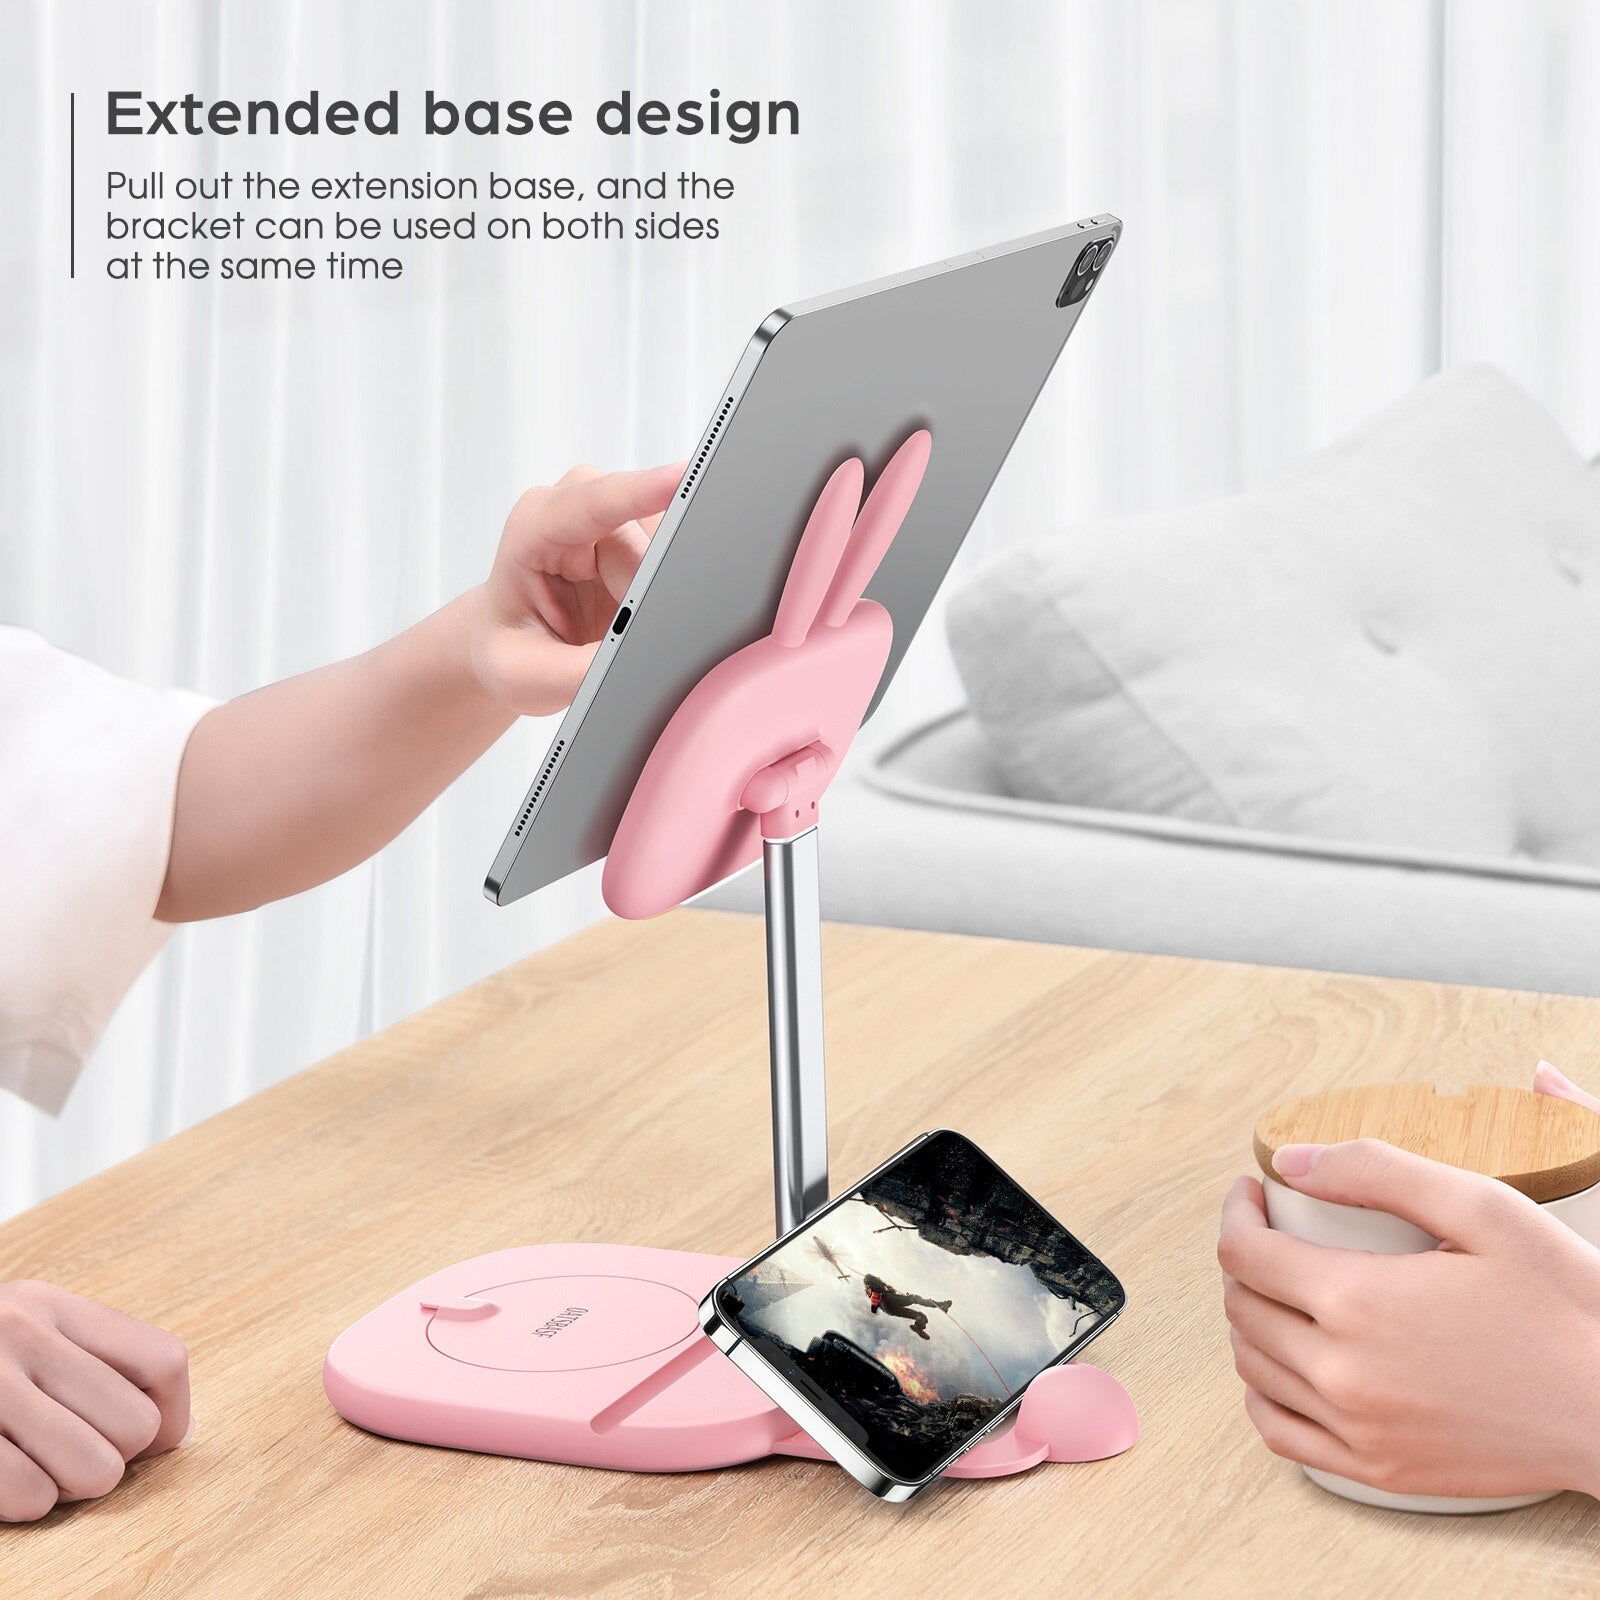 NEW! Kawaii Cute Bunny Phone Holder Desktop Stand